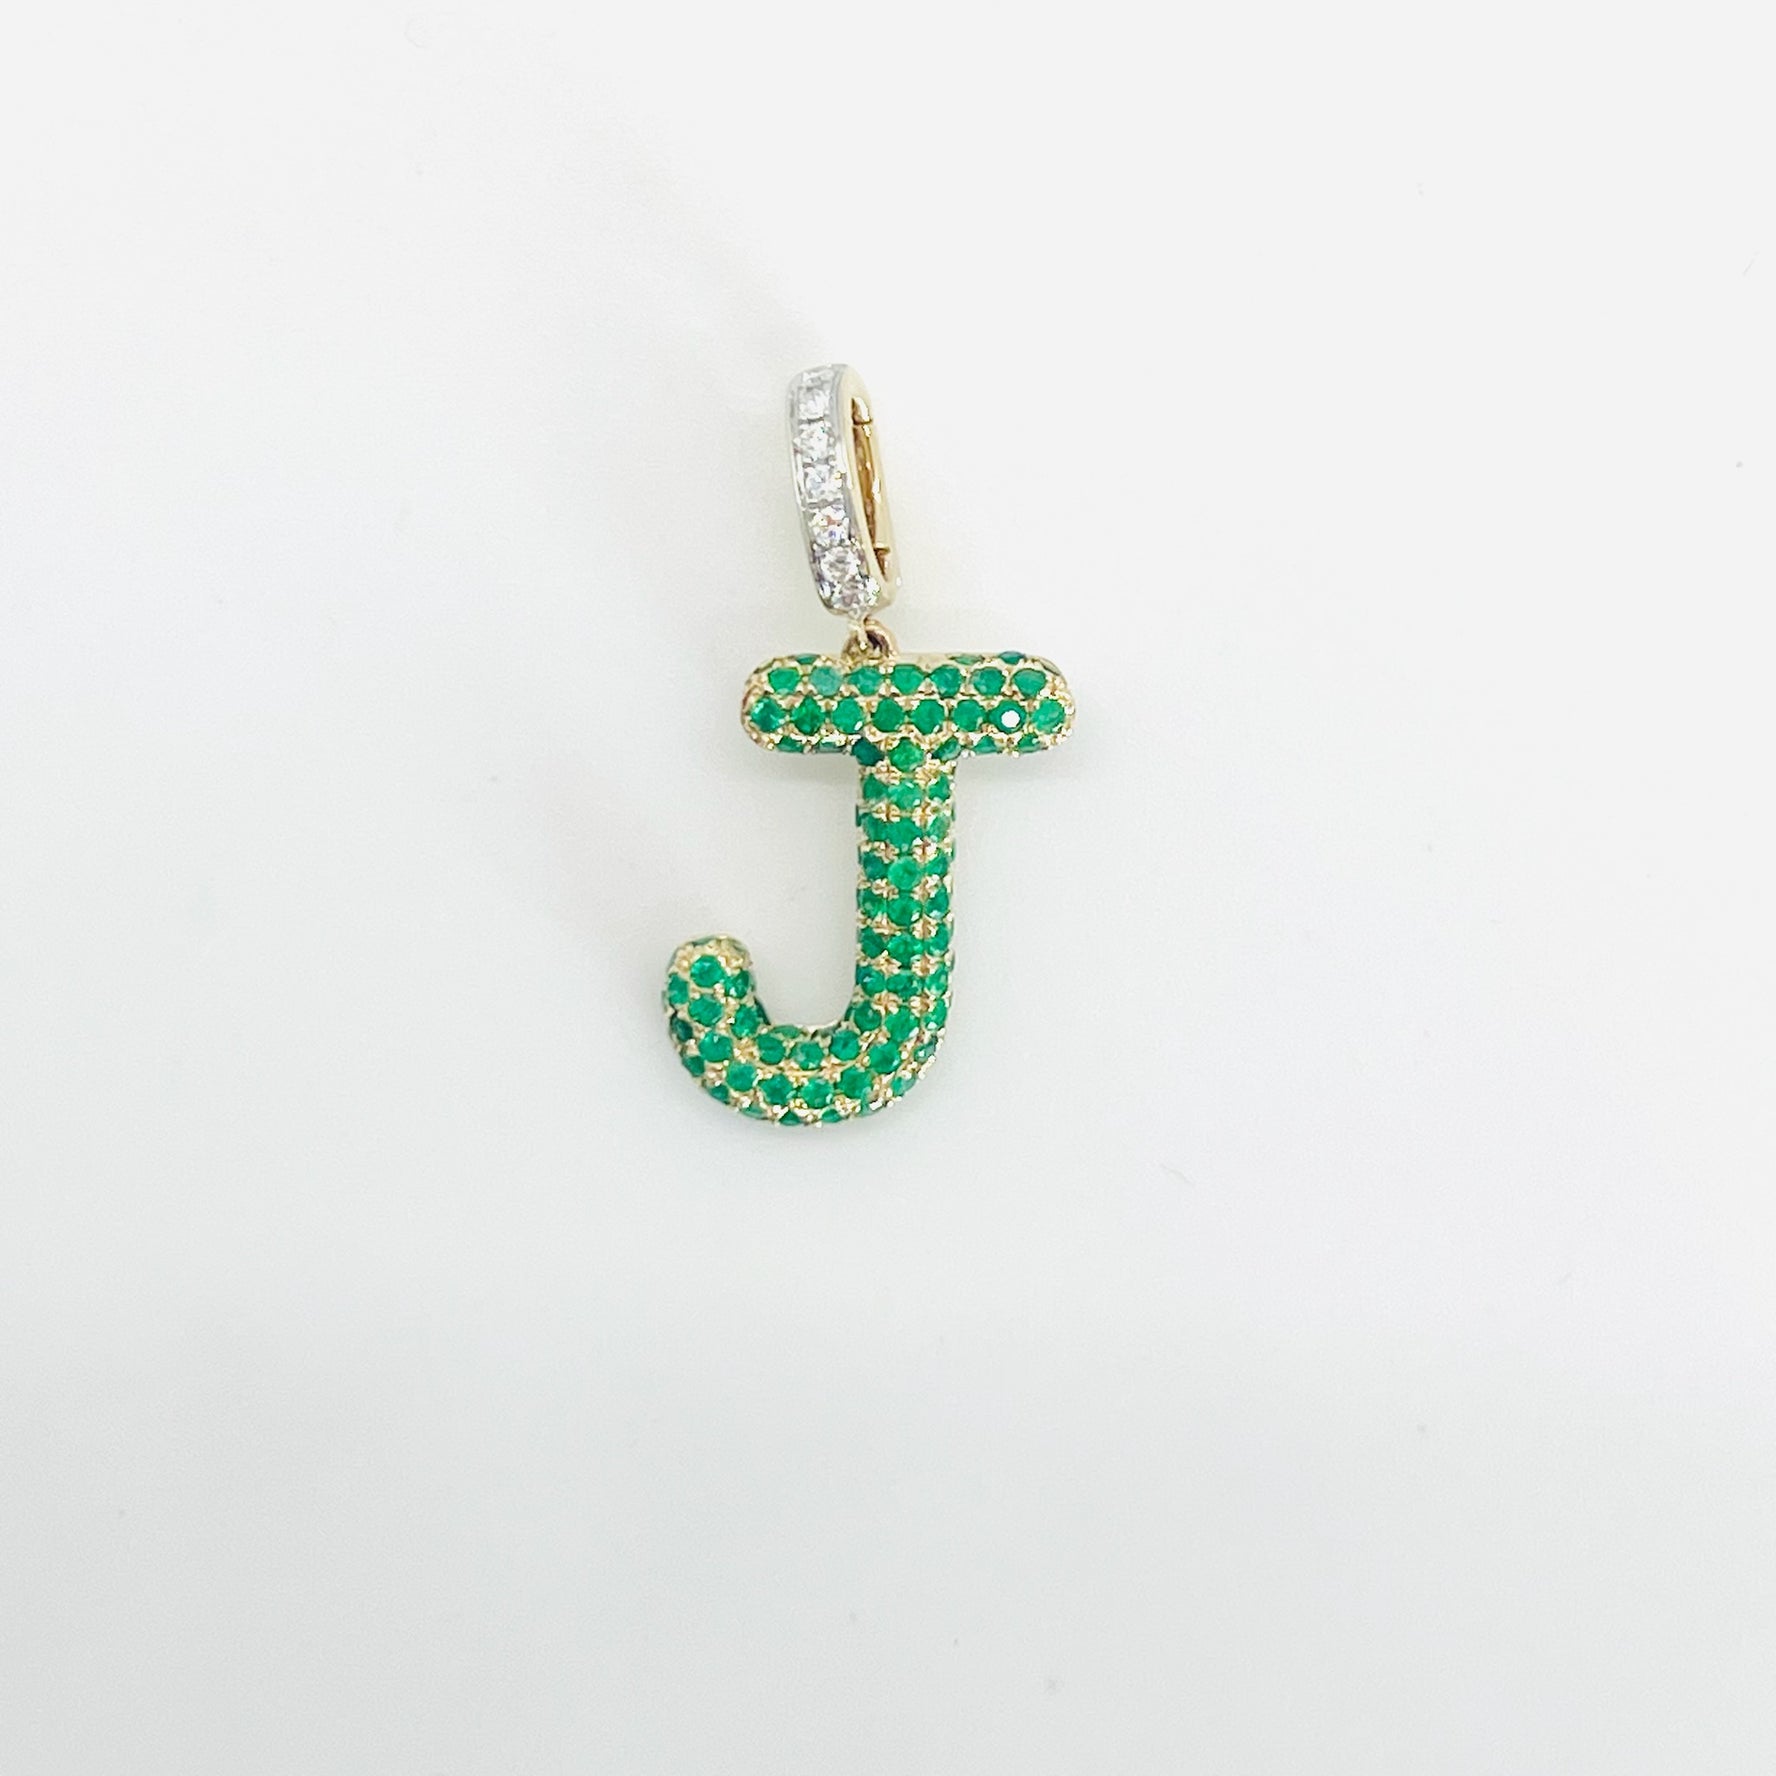 Customizable 14kg single letter emerald and diamond charm